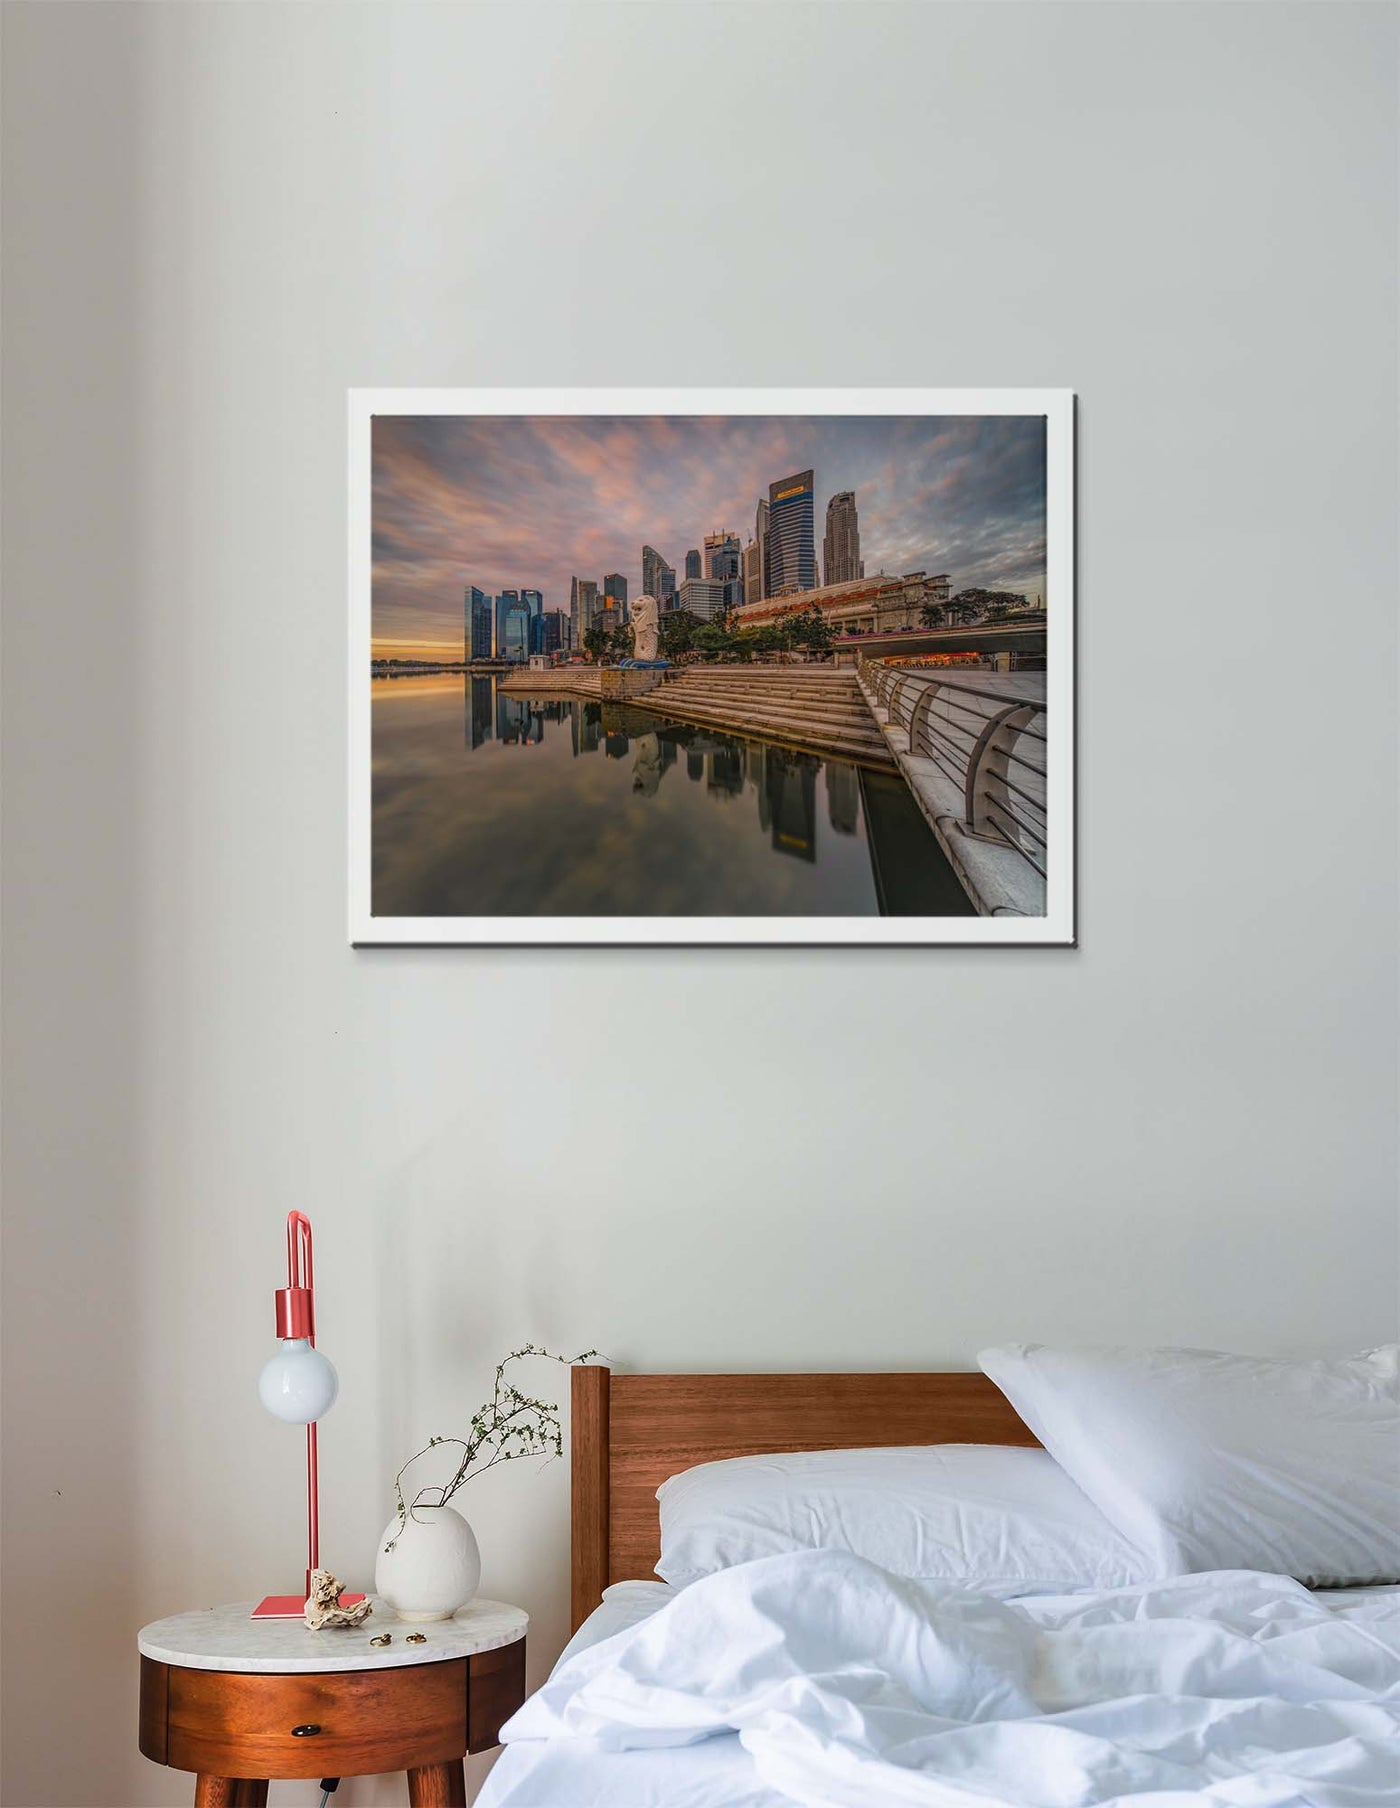 Singapore Merlion (Framed Prints)